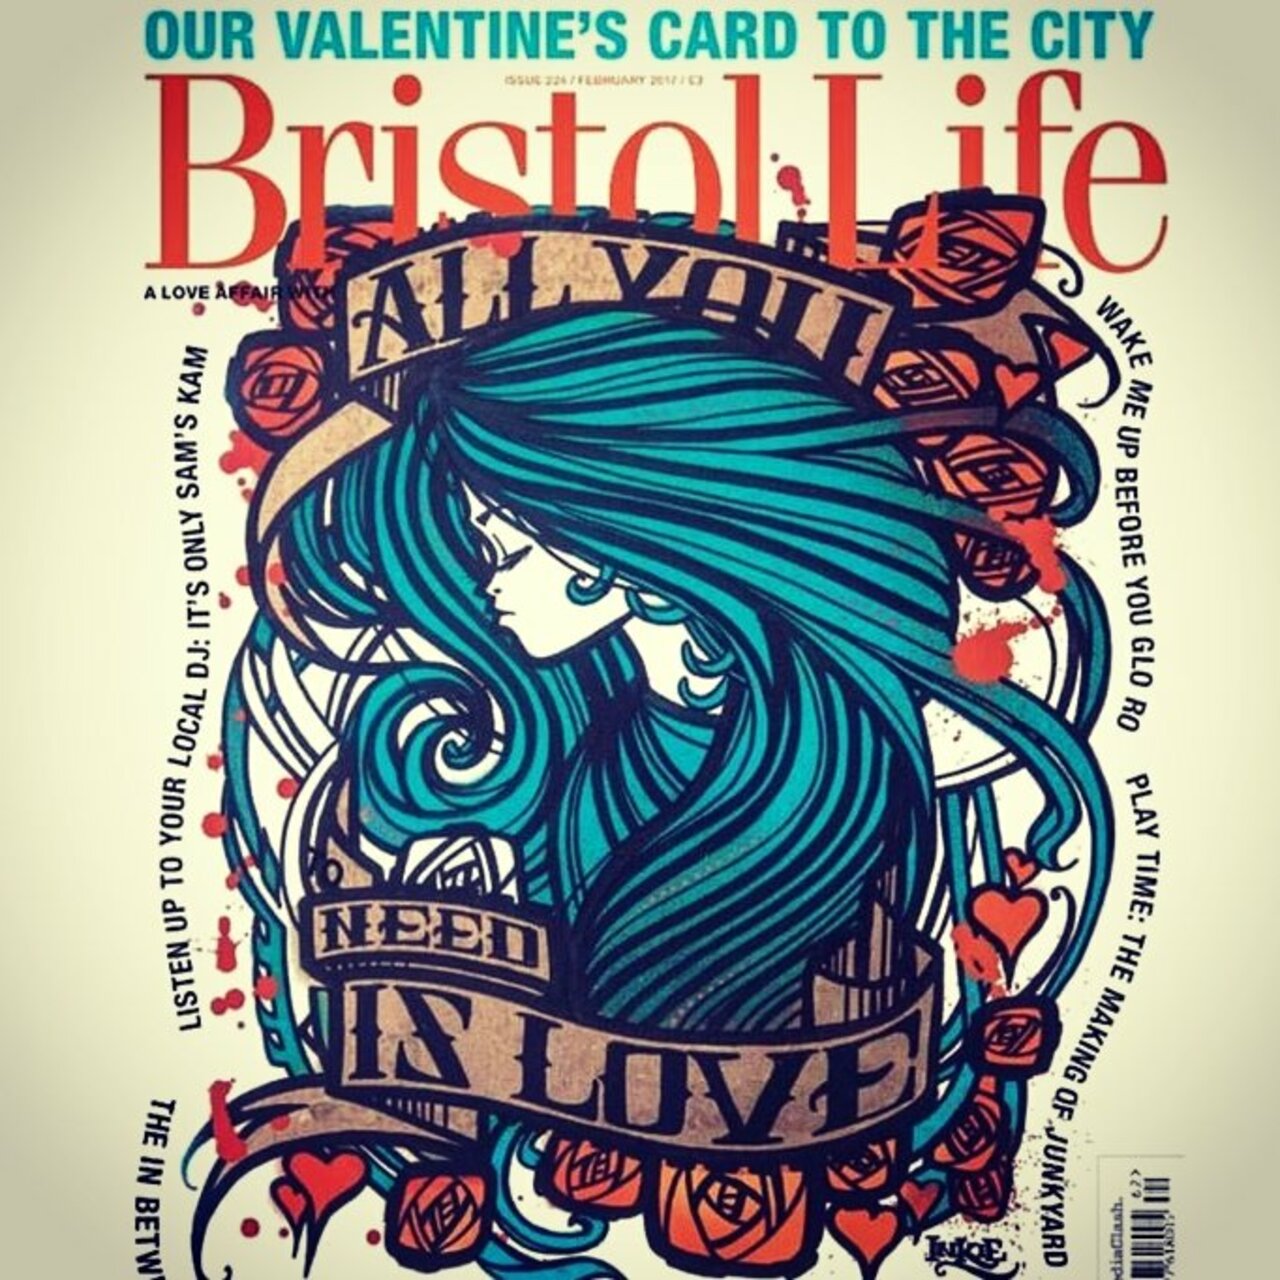 My Valentines cover for the latest Bristol Life magazine #graffiti #streetart @bristollifemag https://t.co/WyQSQut1Ie